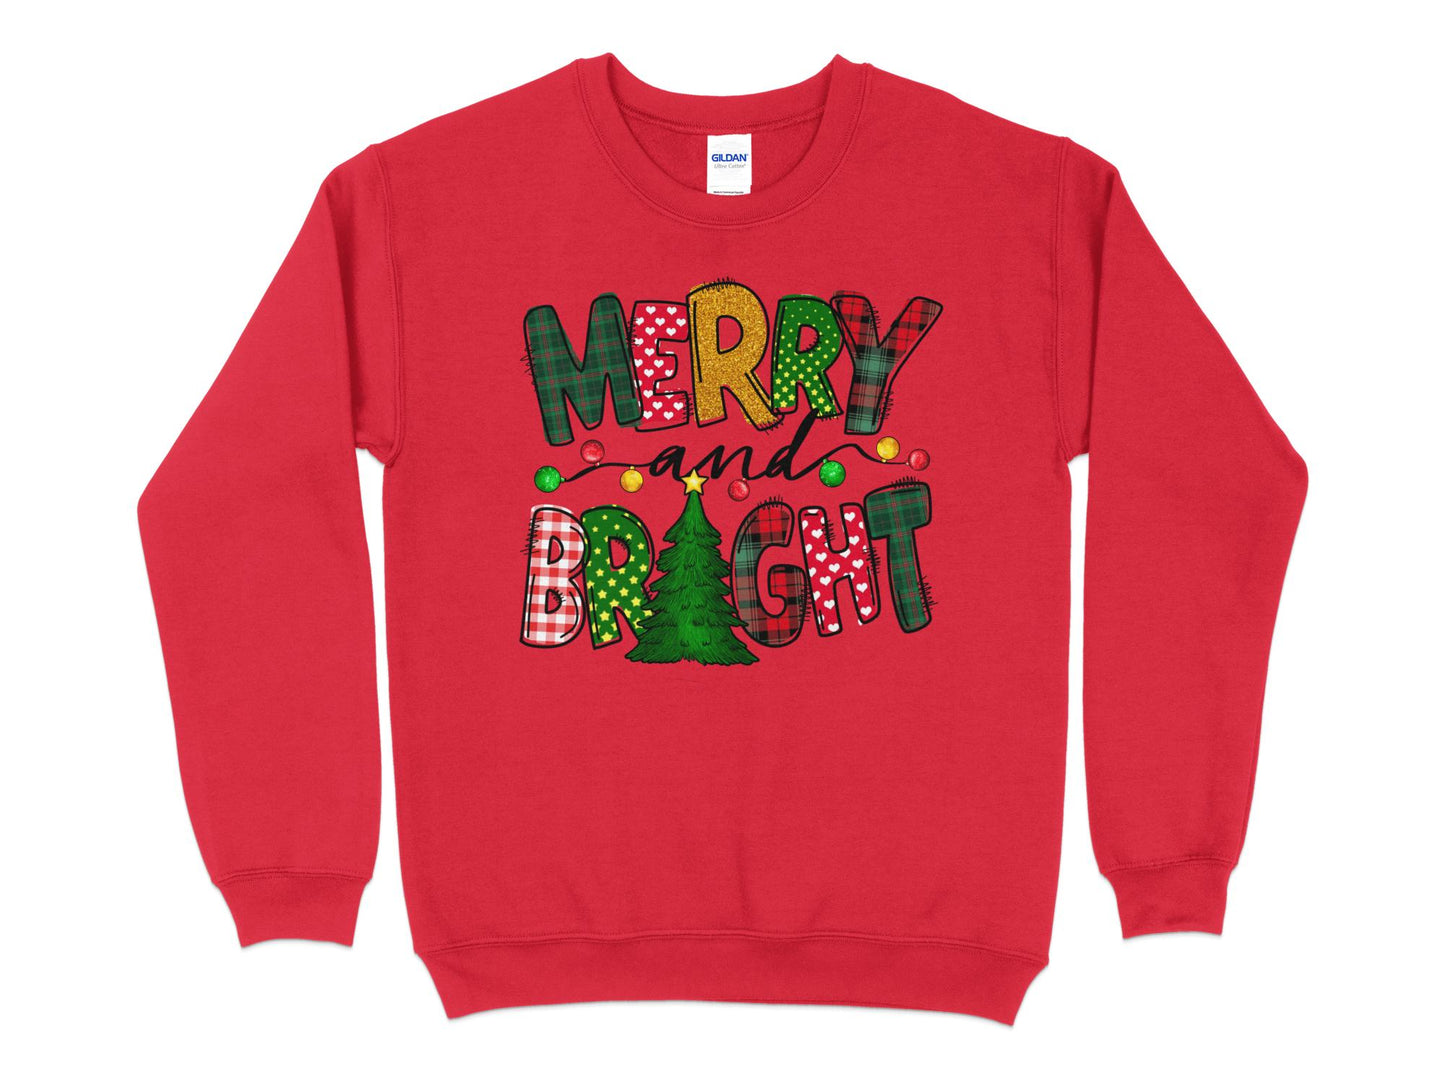 Merry and Bright Sweatshirt, Merry Christmas Shirt for Women, Christmas Crewneck - Mardonyx Sweatshirt Red / S